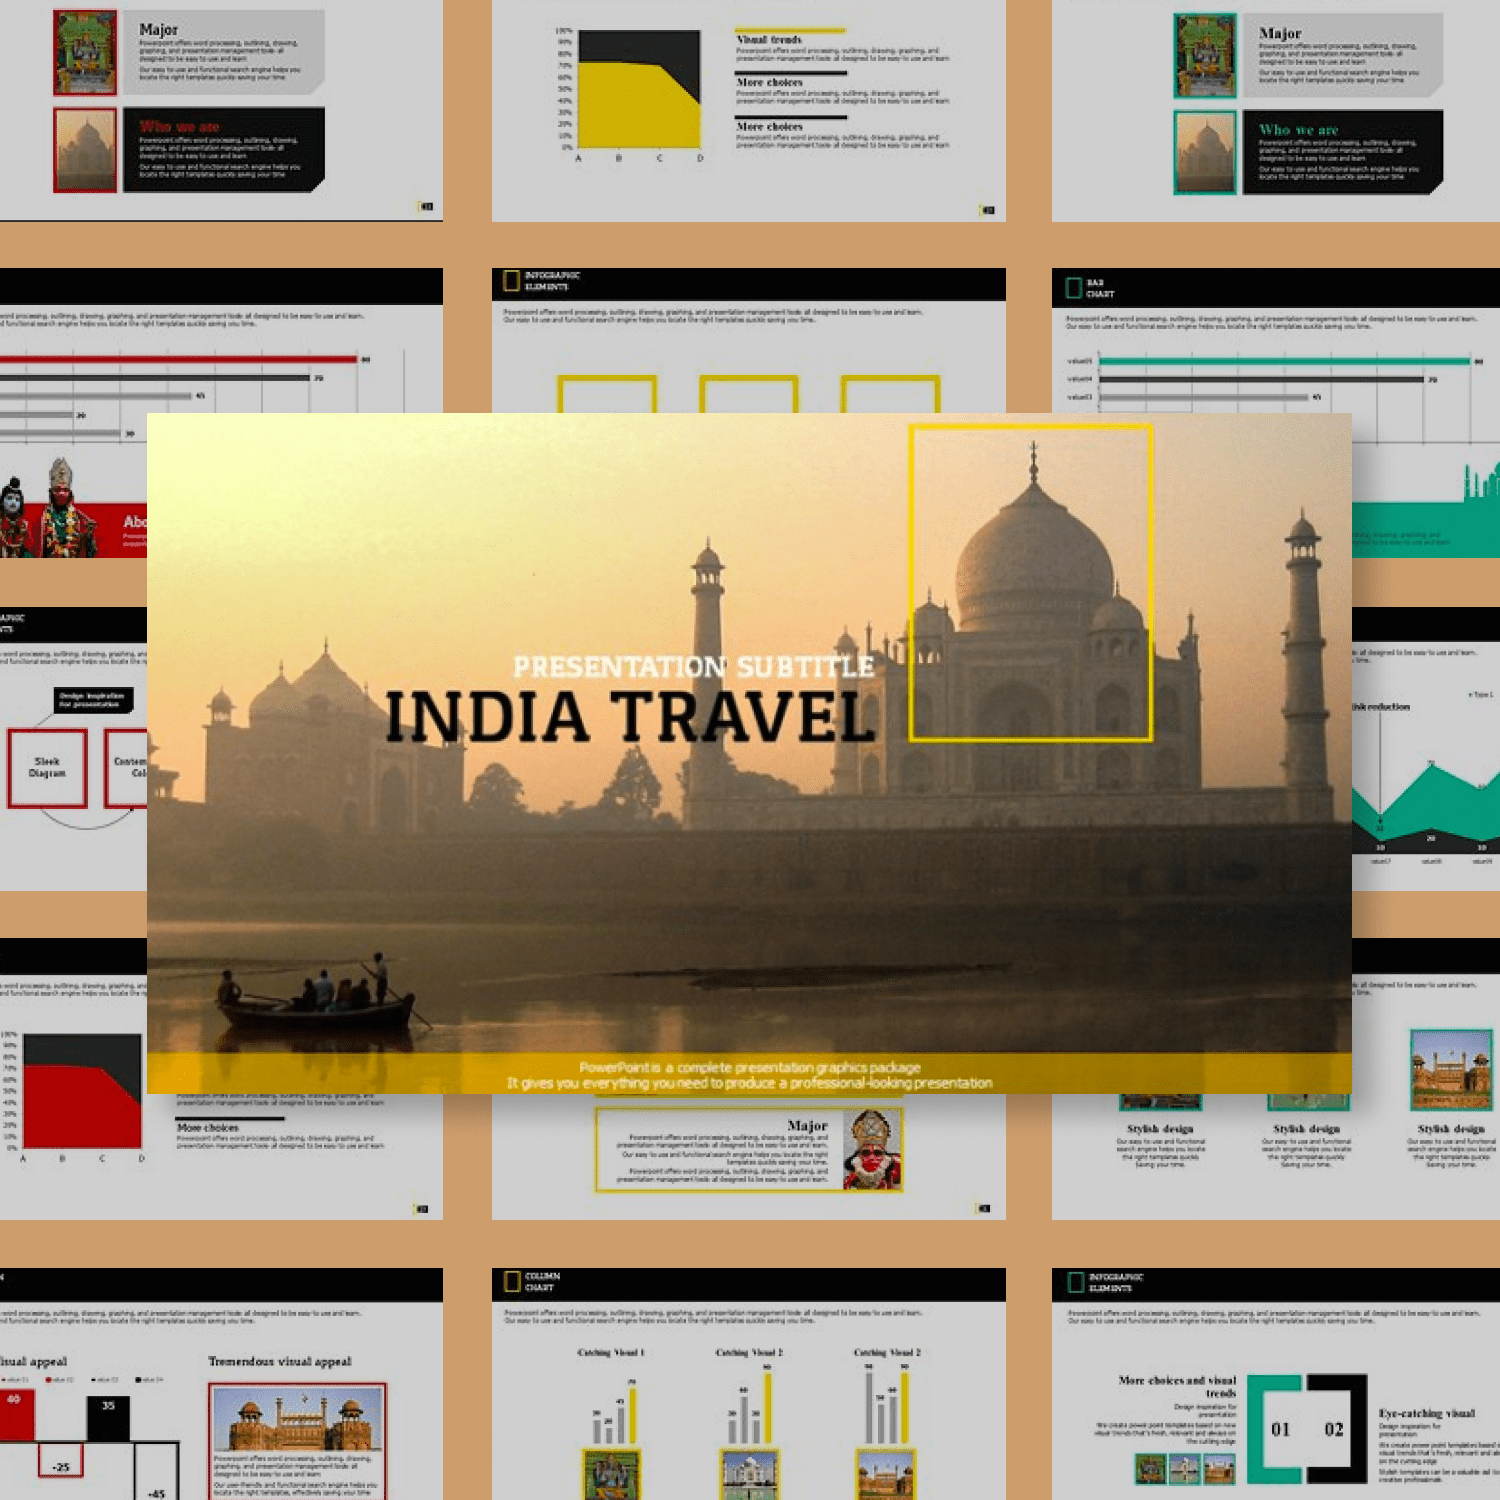 INDIA TRAVEL PowerPoint Presentation by MasterBundles Collage Image.